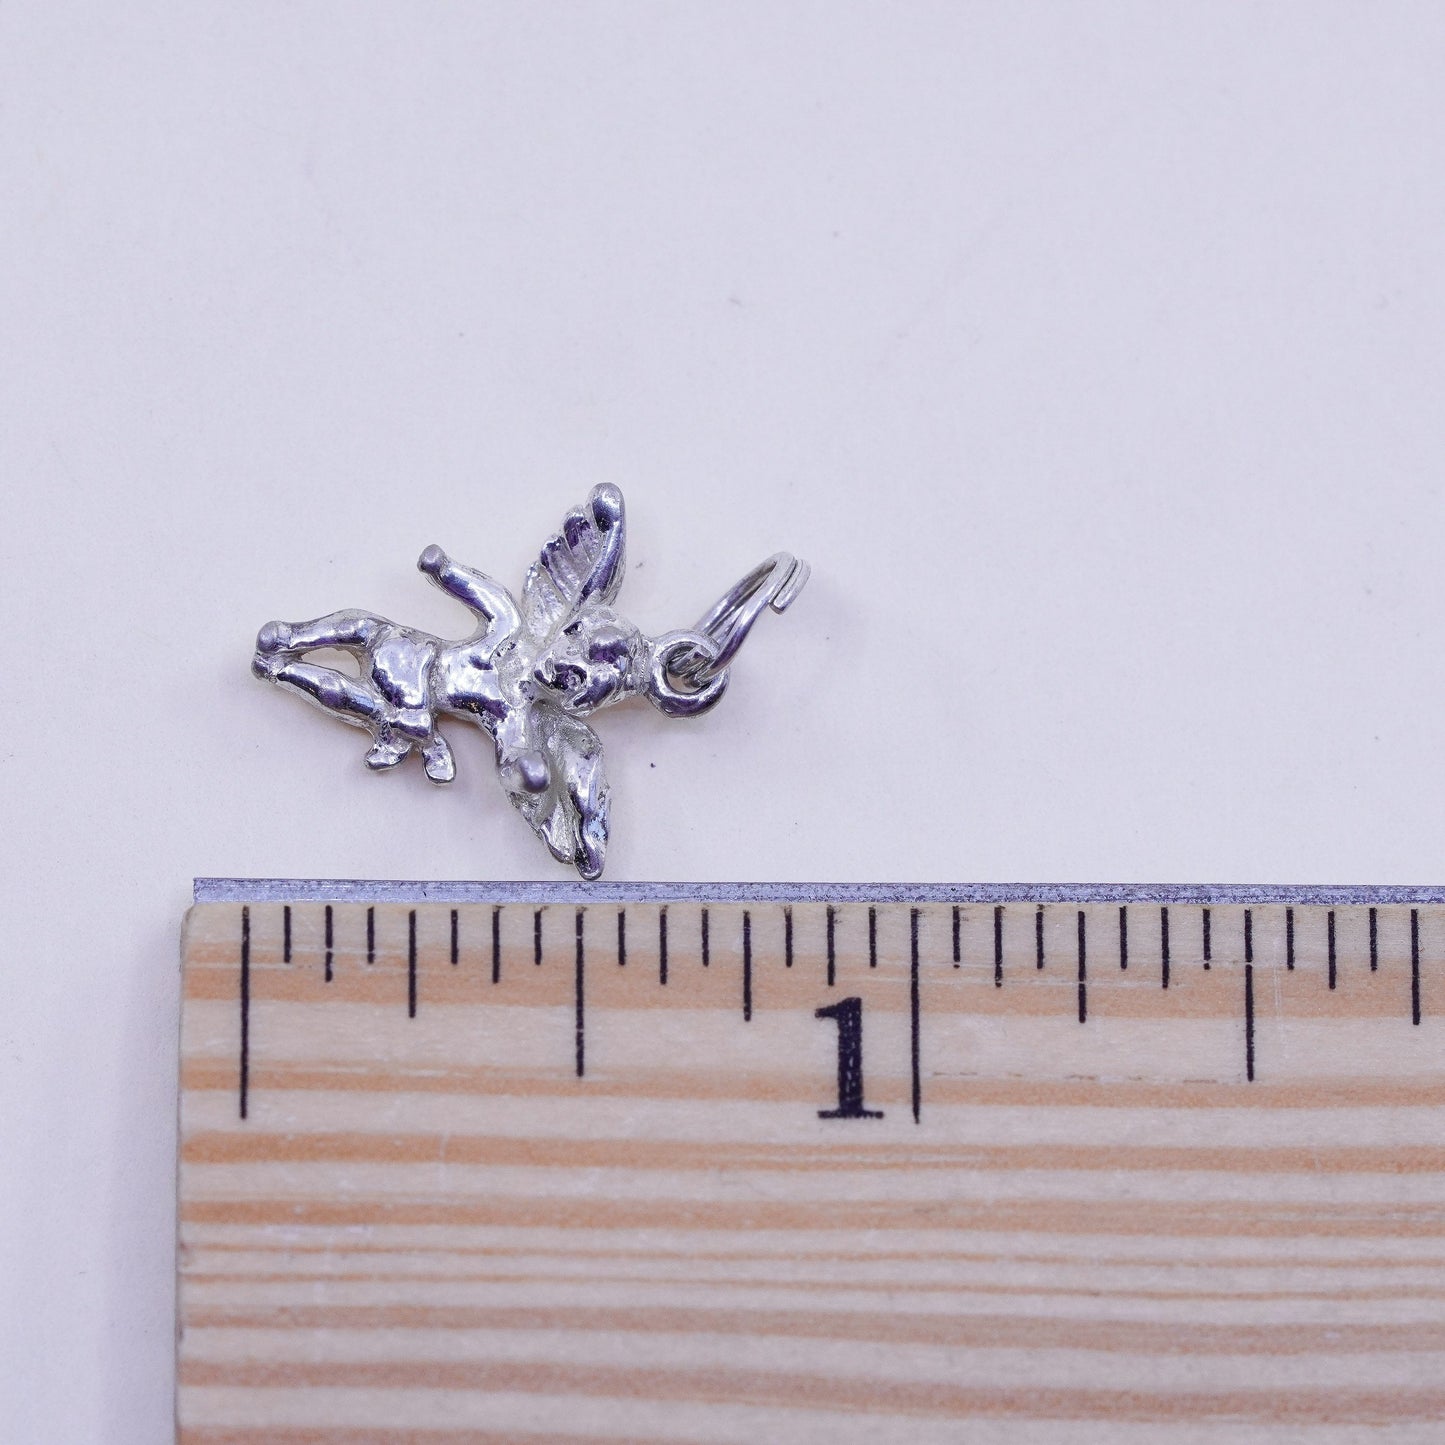 Vintage sterling silver handmade pendant, 925 angel charm